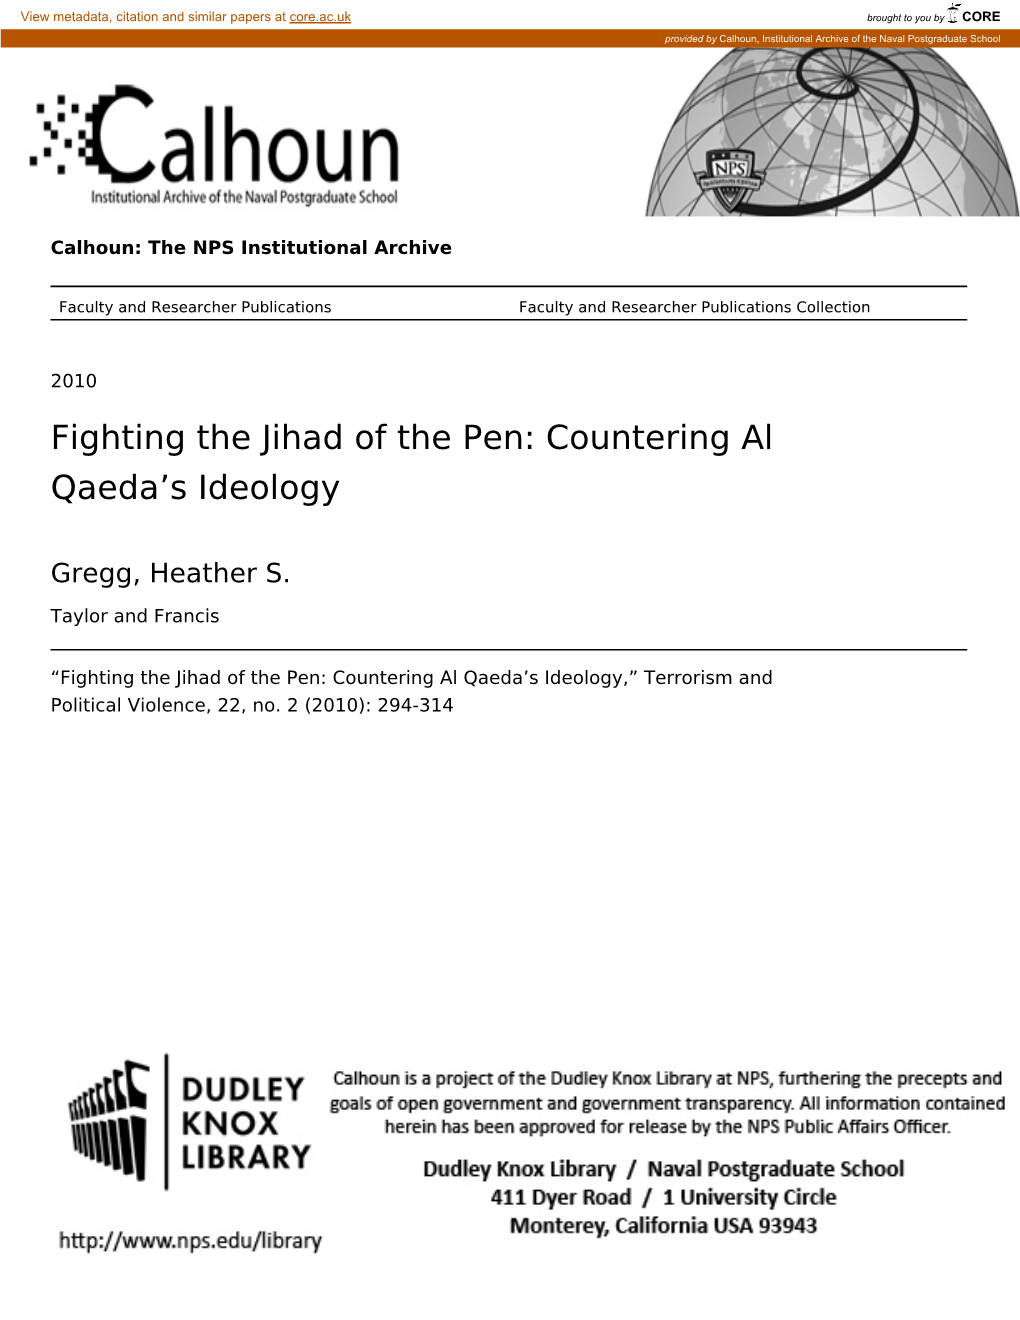 Fighting the Jihad of the Pen: Countering Al Qaeda's Ideology